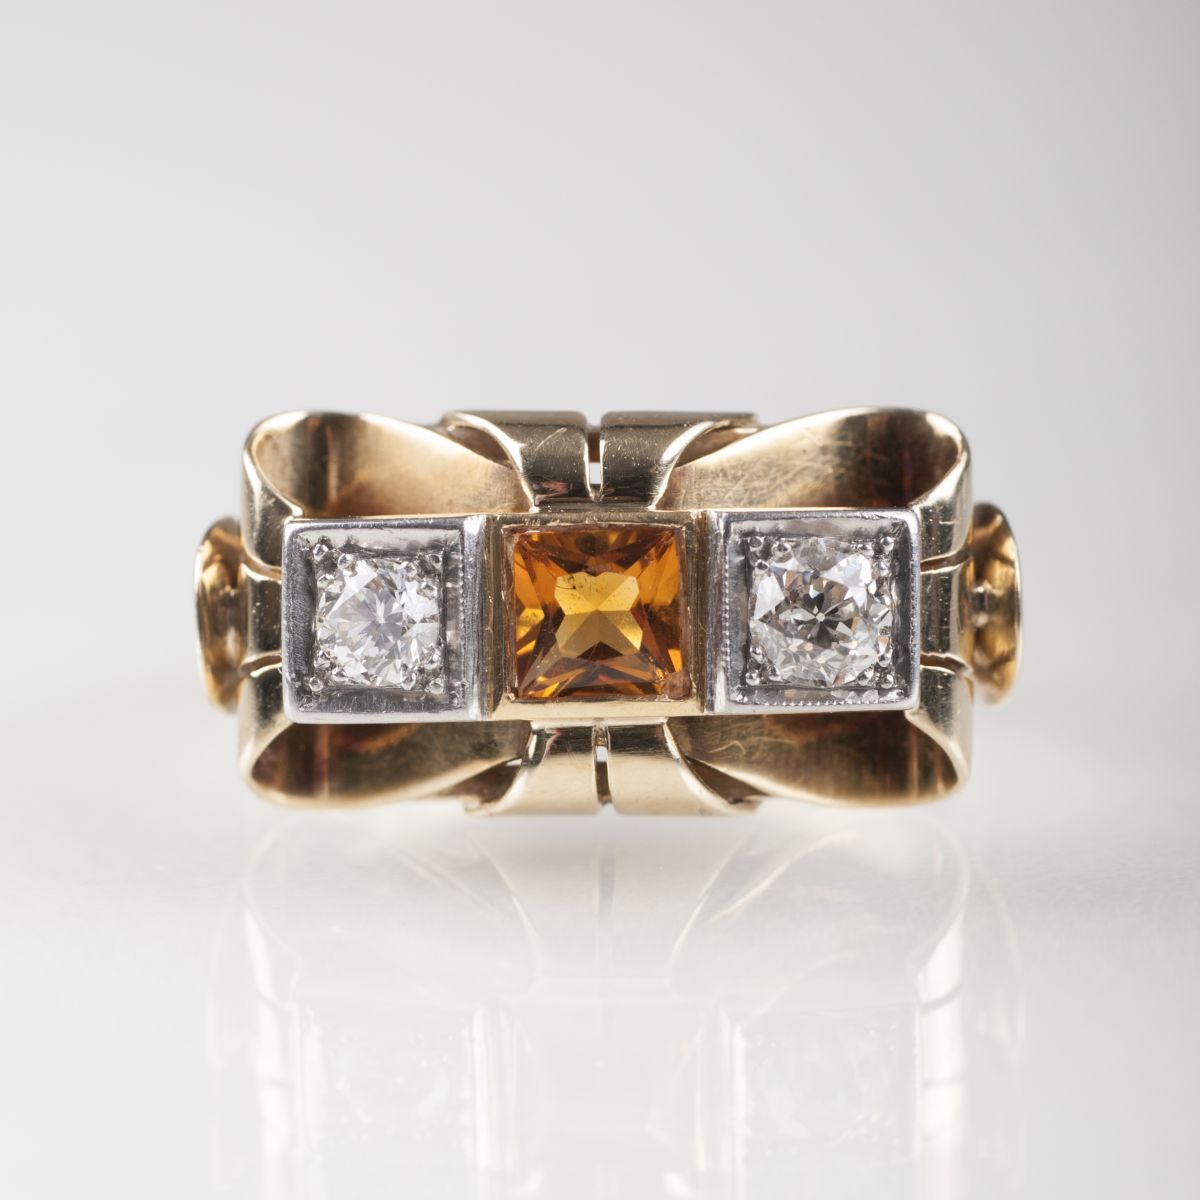 A Vintage diamond citrine ring